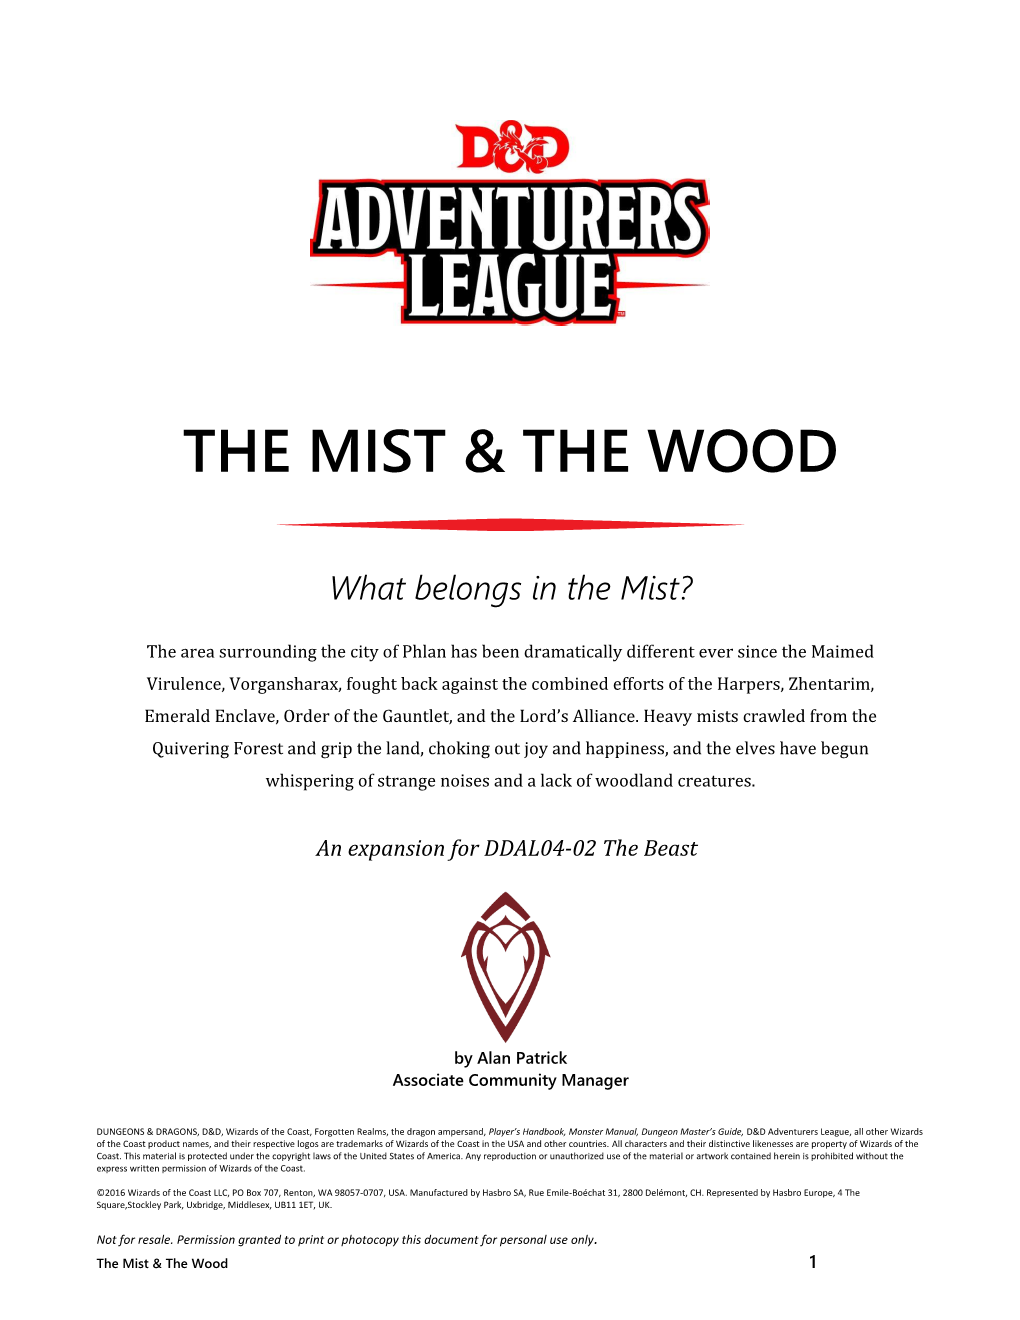 The Mist & the Wood